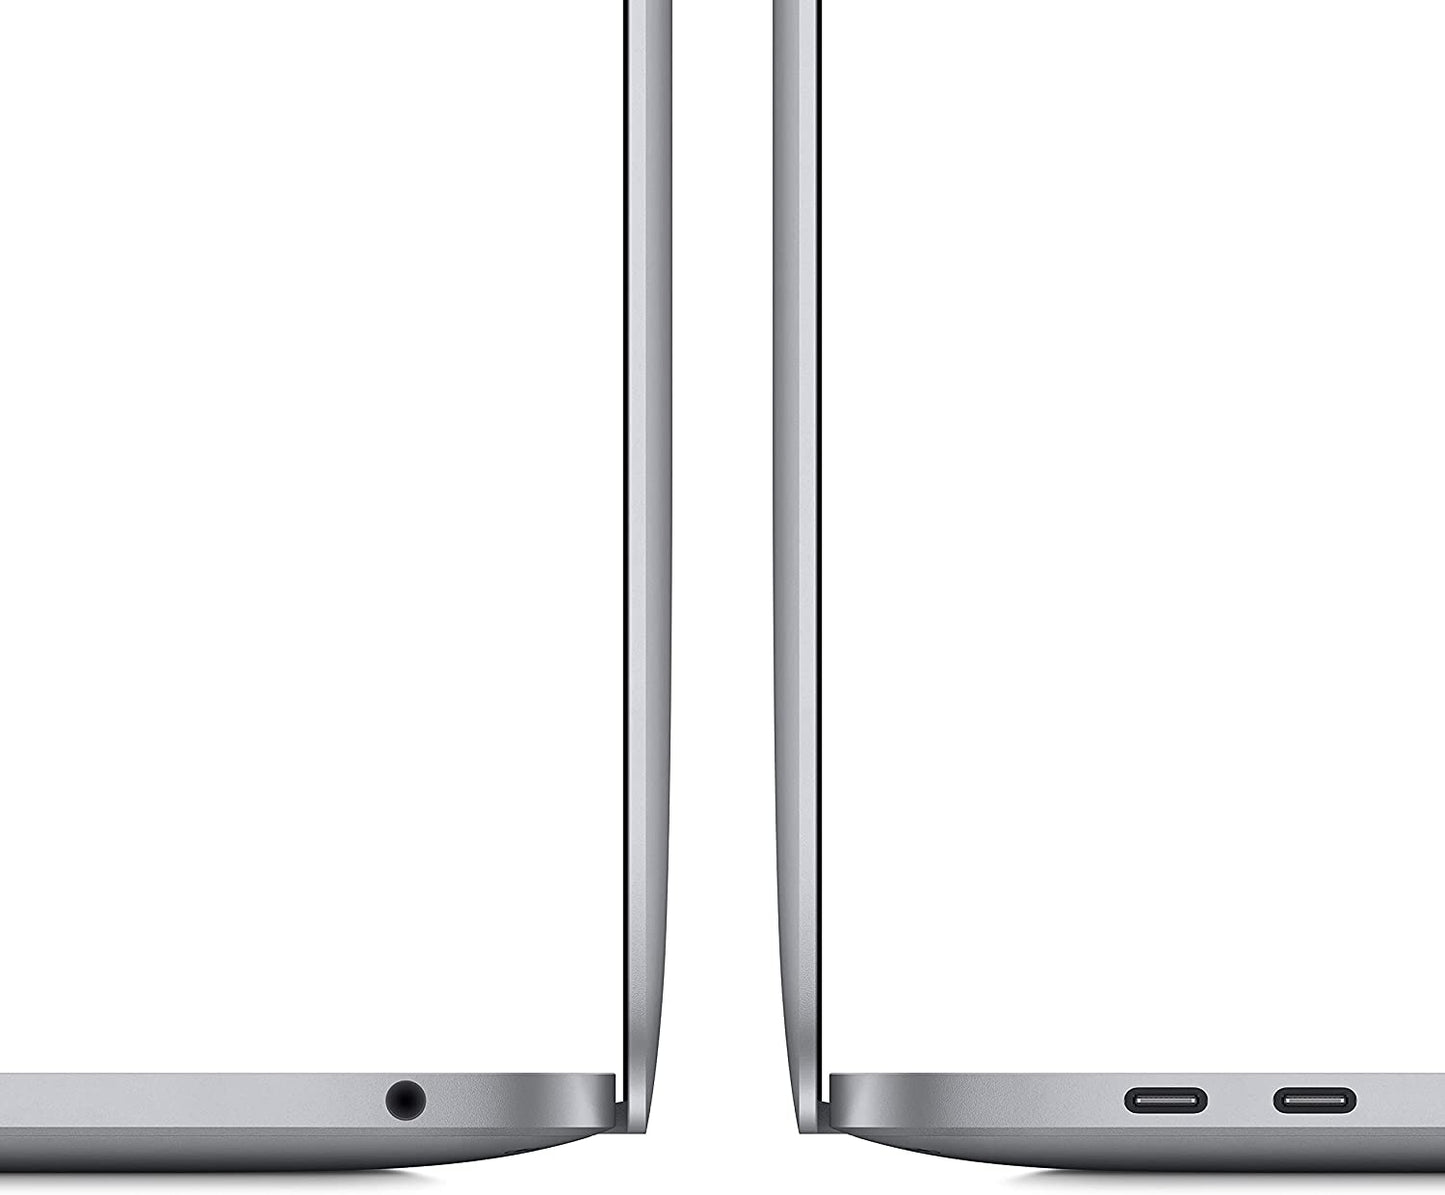 Apple MacBook Pro M1 A2338 13" 8 GB RAM,256 GB SSD, Space Gray